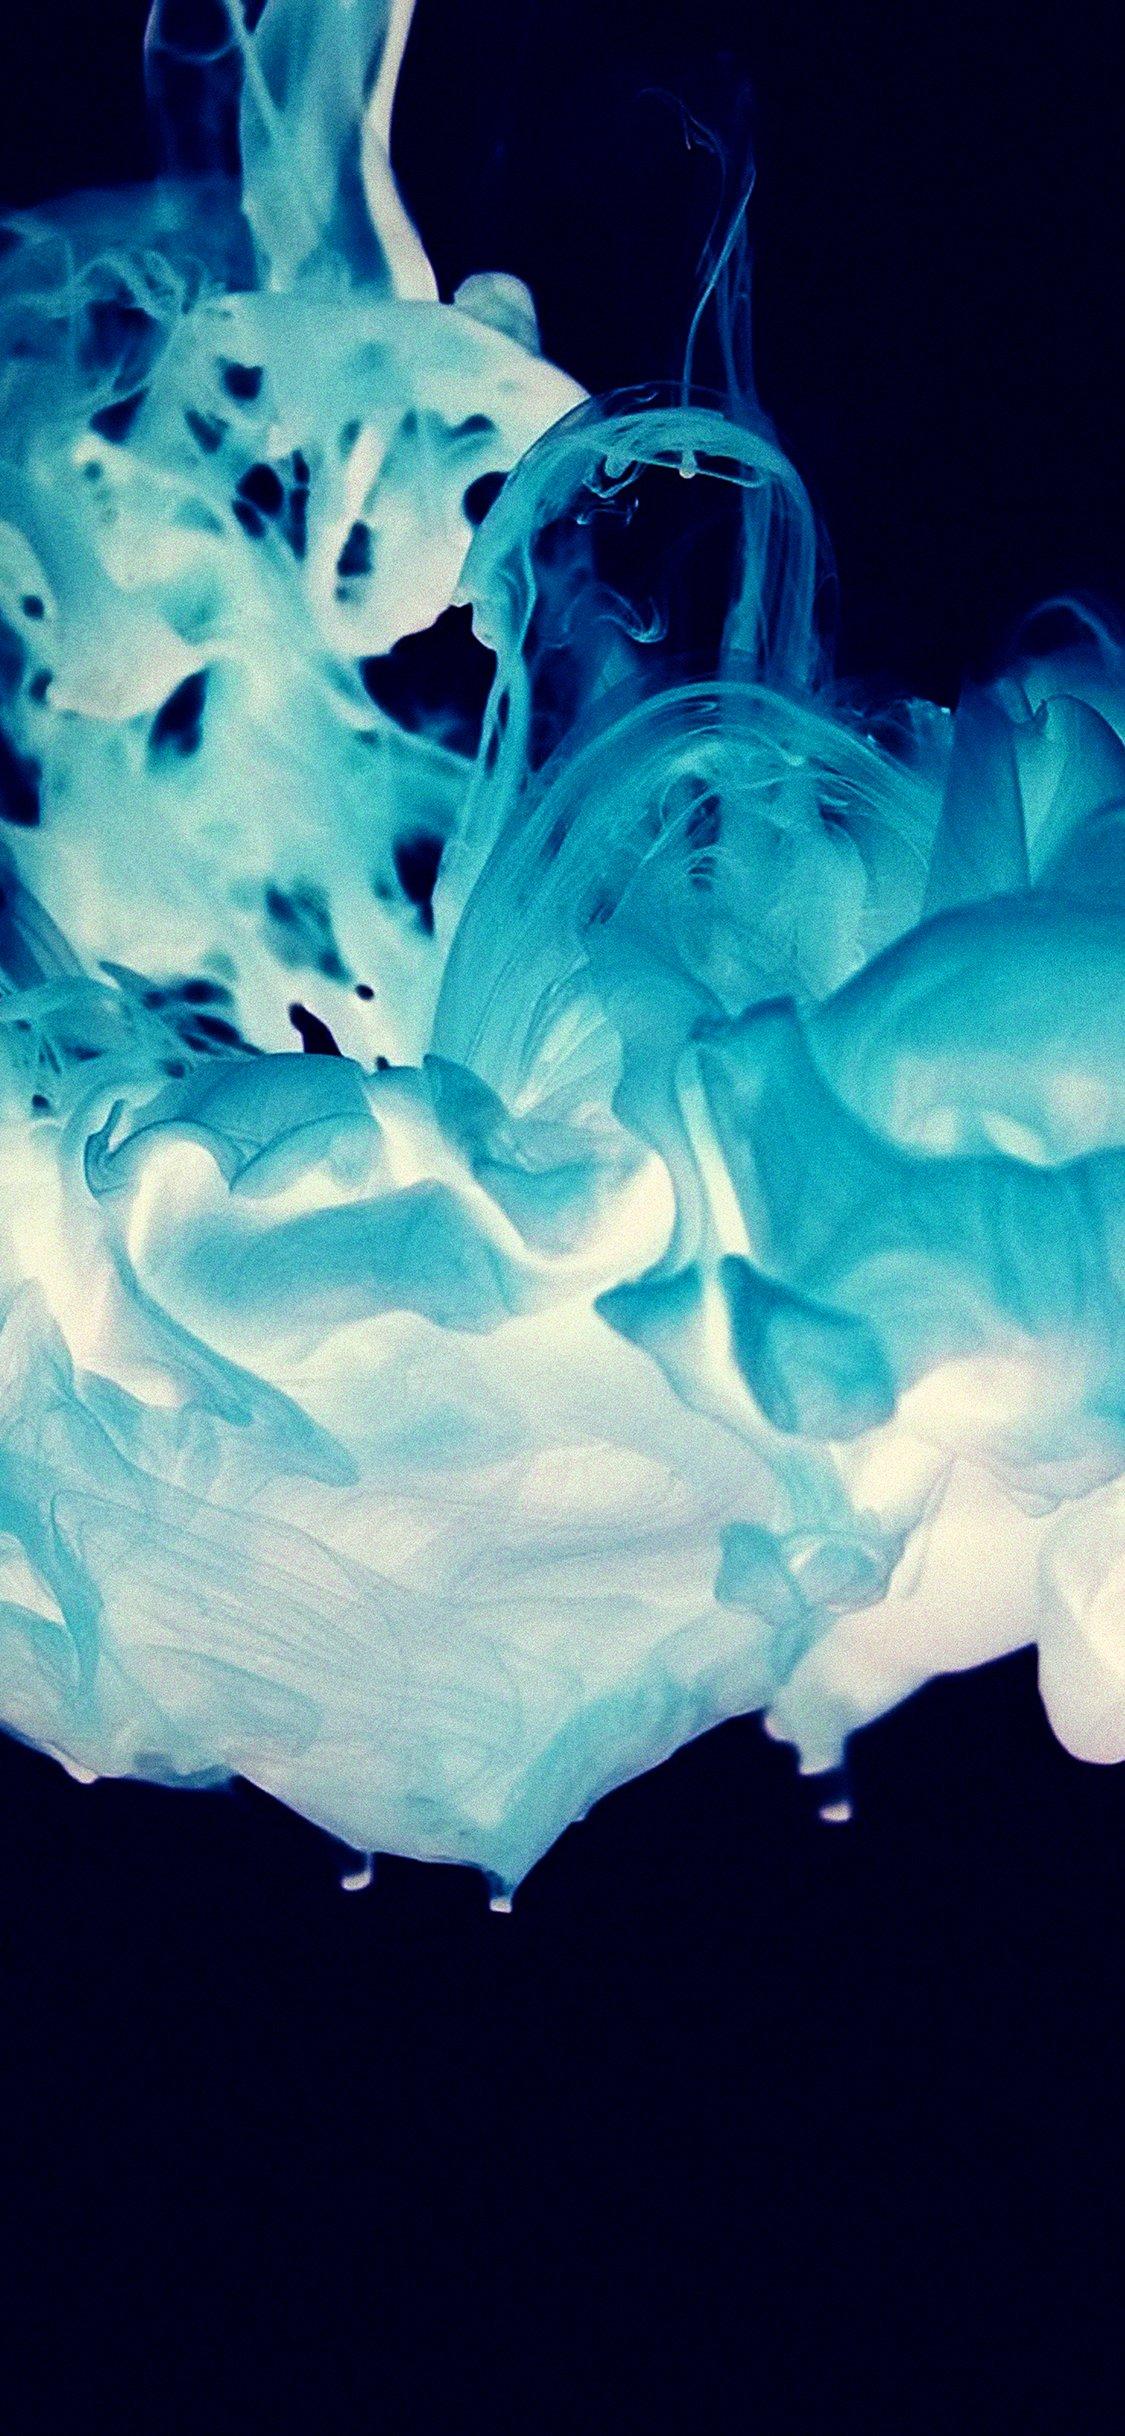 iPhone wallpaper. blue smoke art